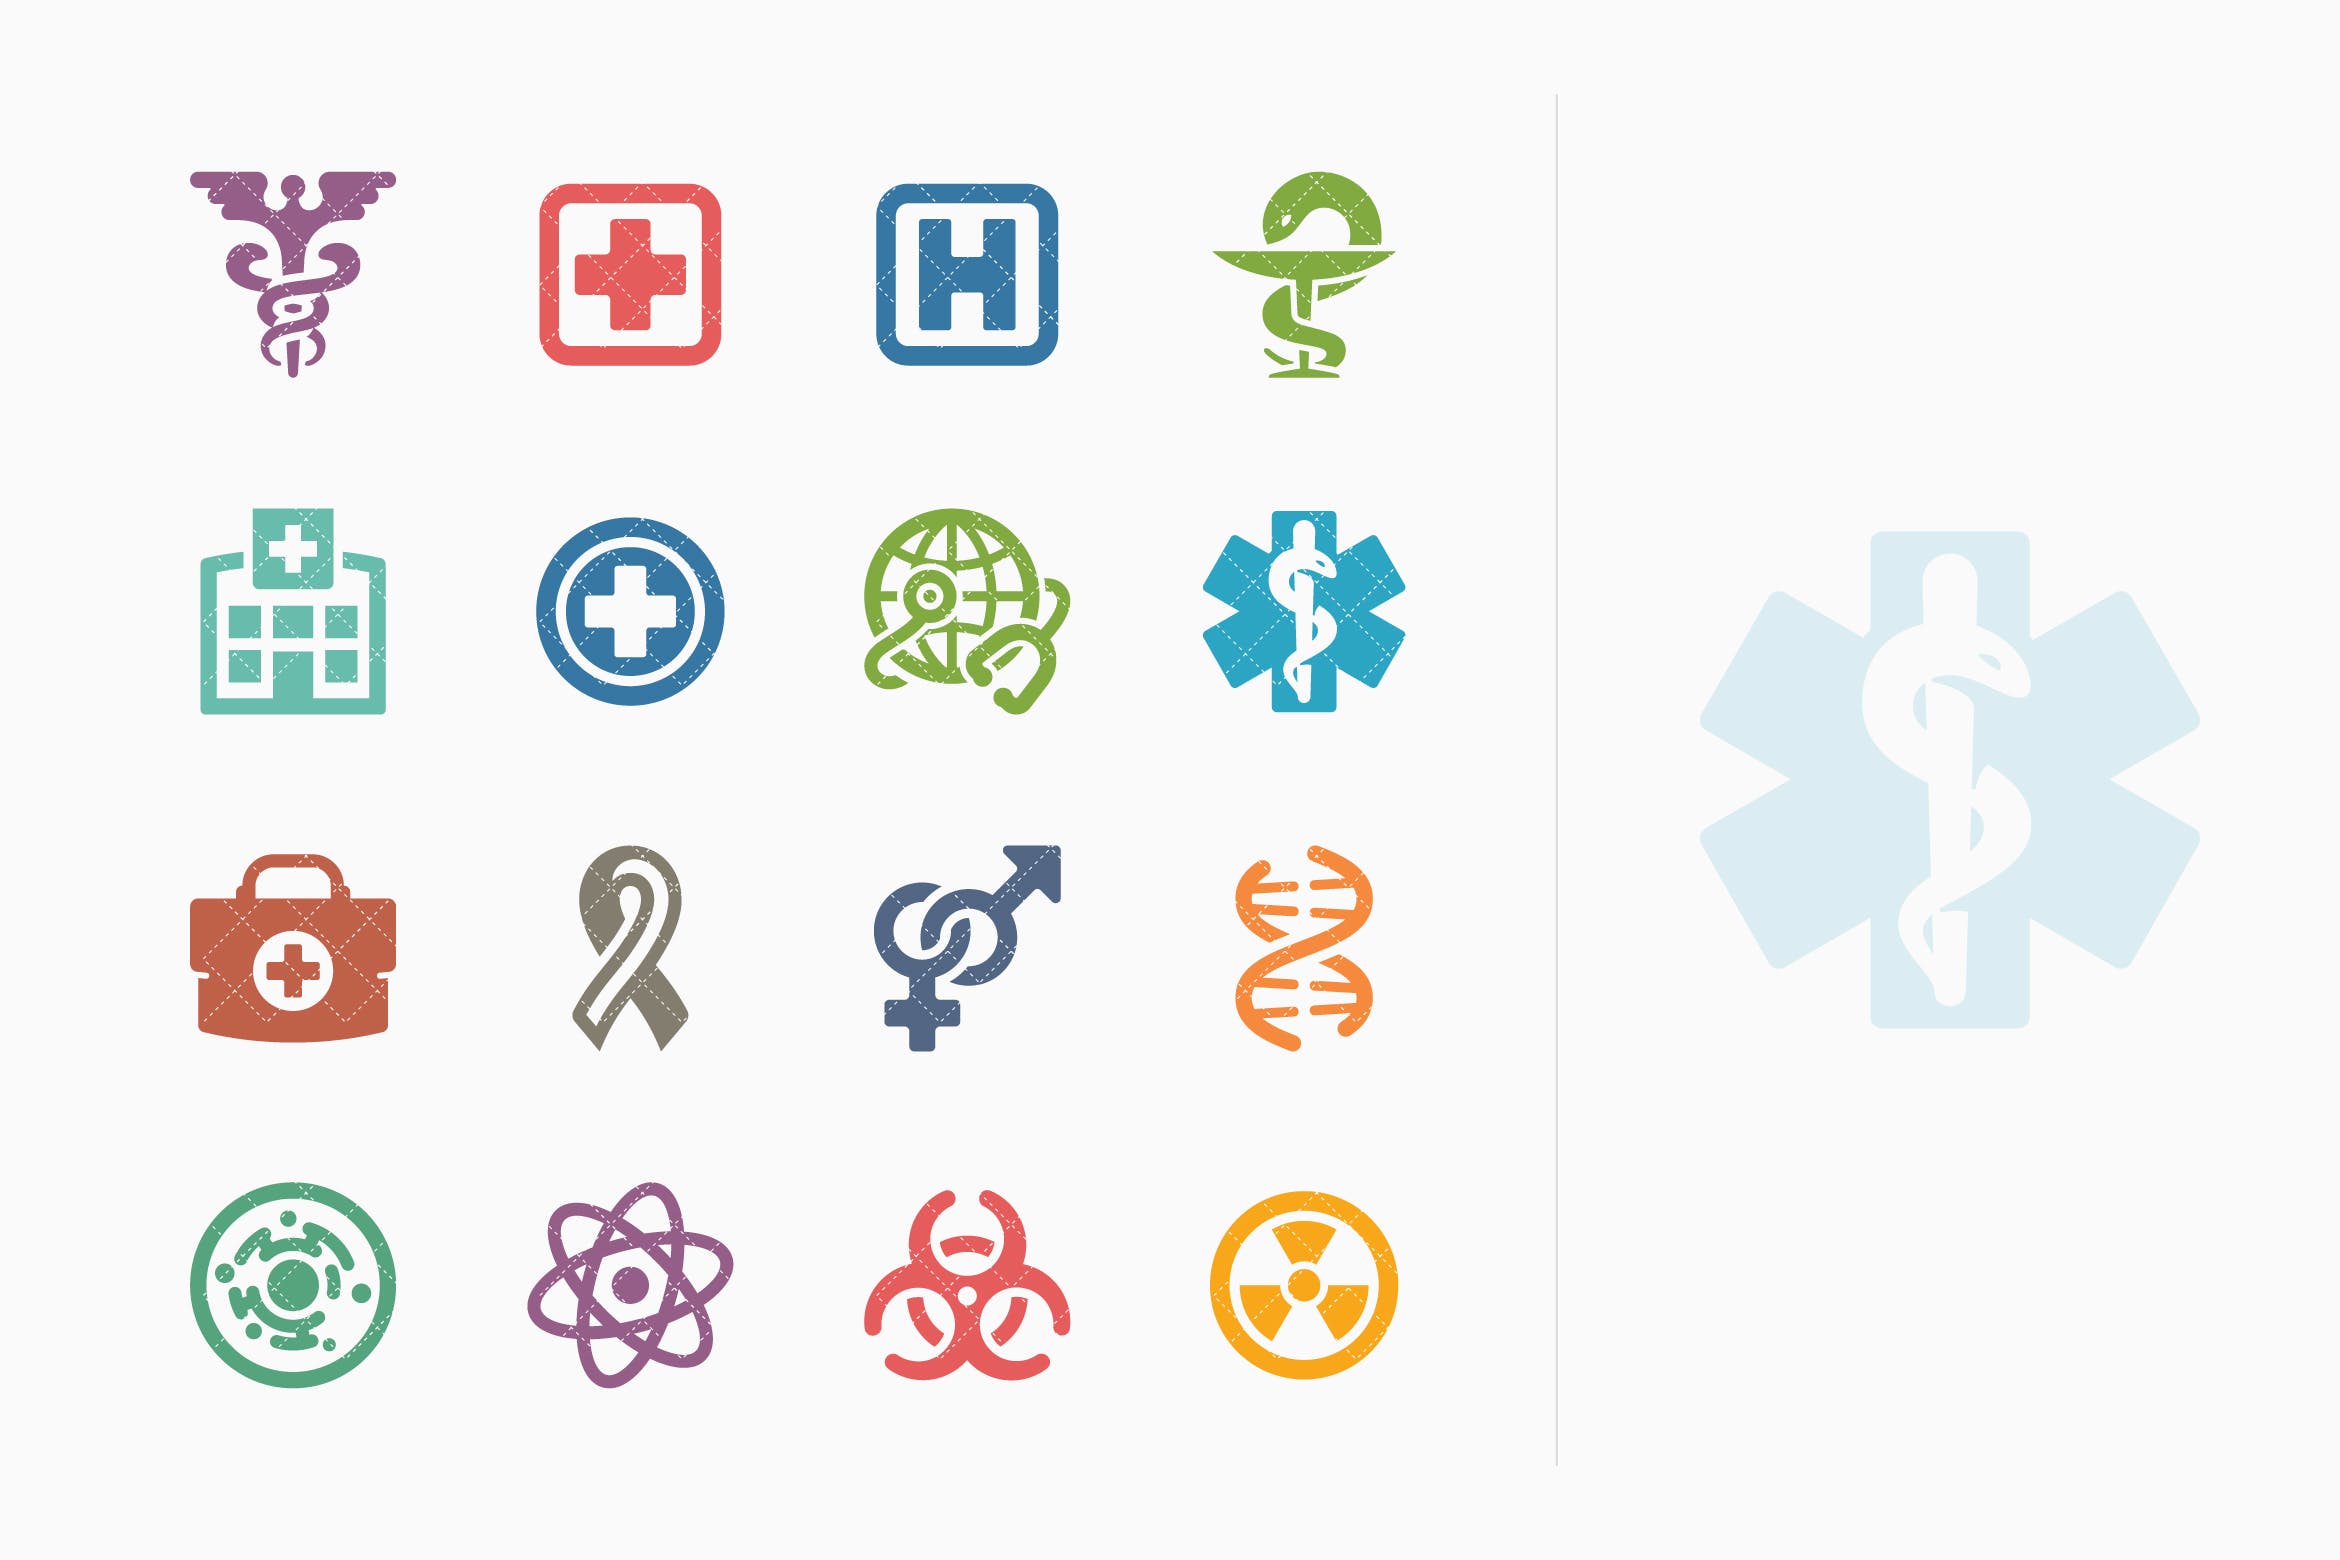 Colored系列-医疗保健主题矢量16图库精选图标集v1 Medical & Health Care Icons Set 1 – Colored Series插图